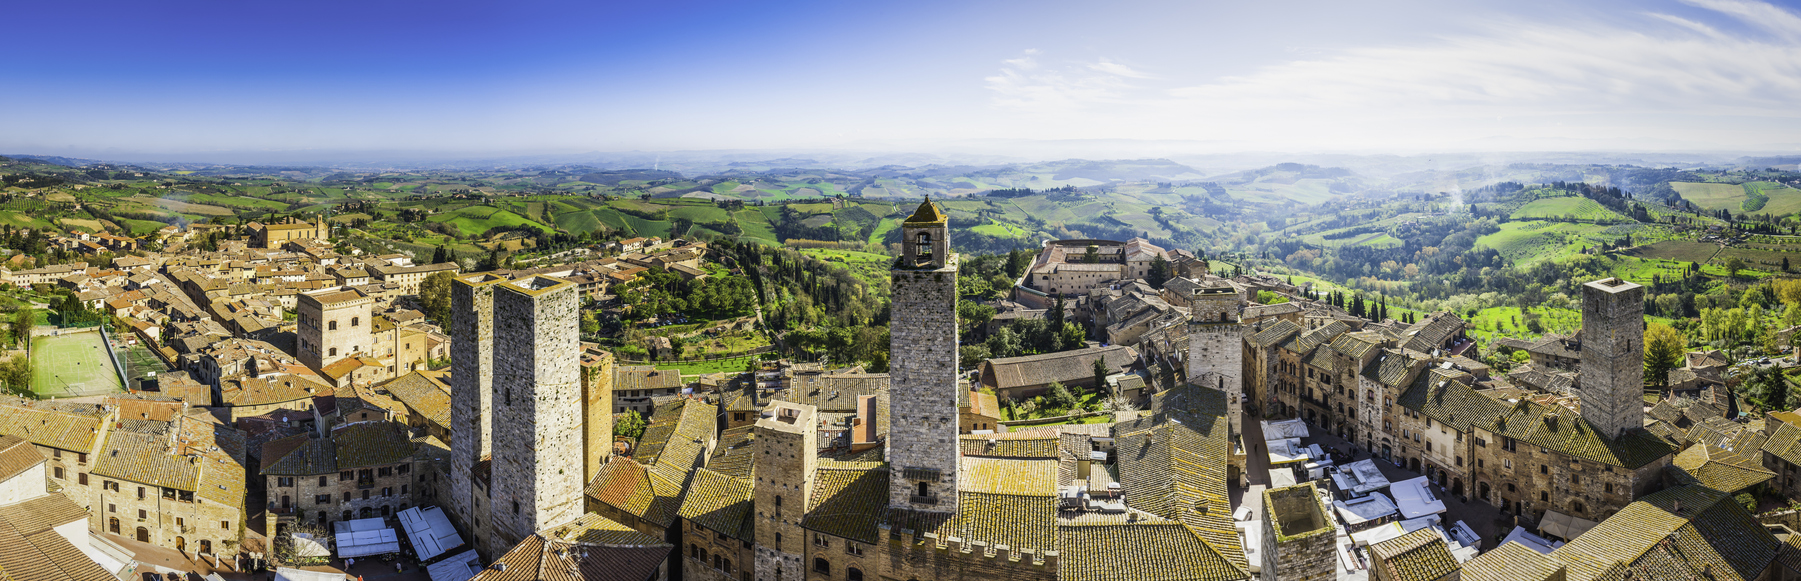 San Giminiano et ses environs, en Toscane. © iStock / fotoVoyager